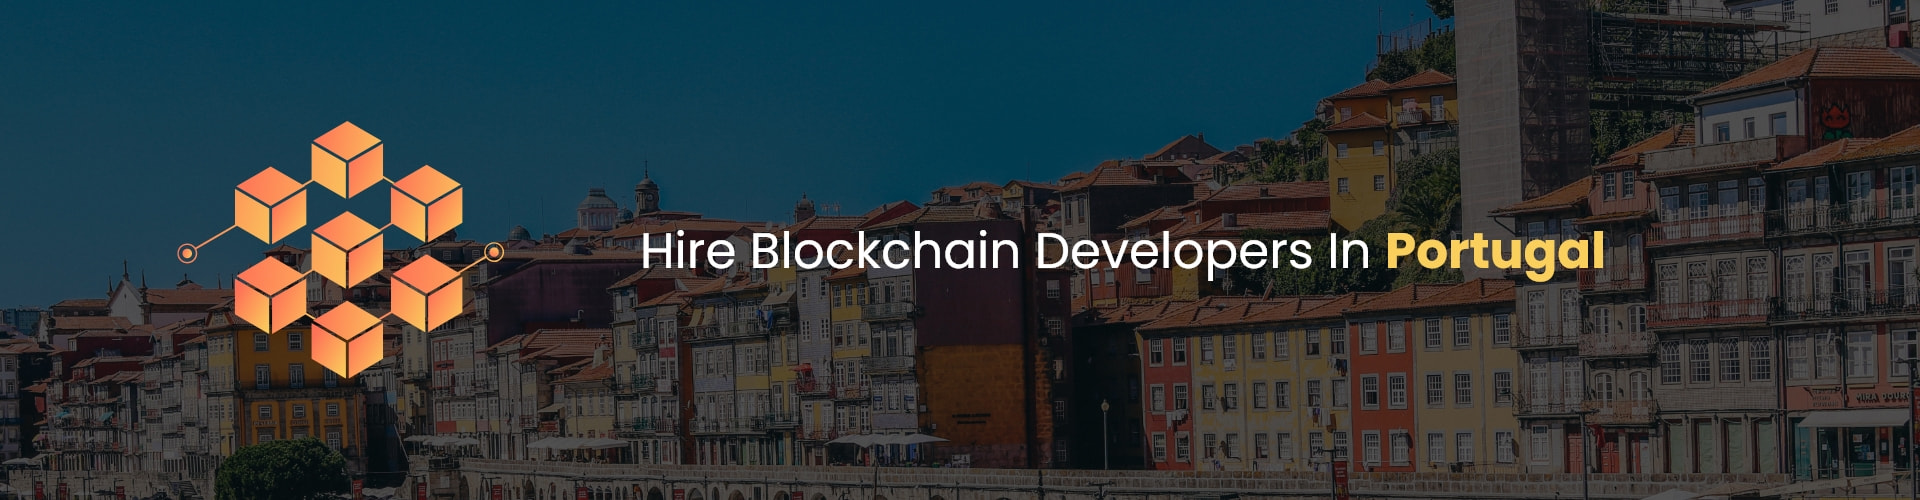 hire blockchain developers in portugal